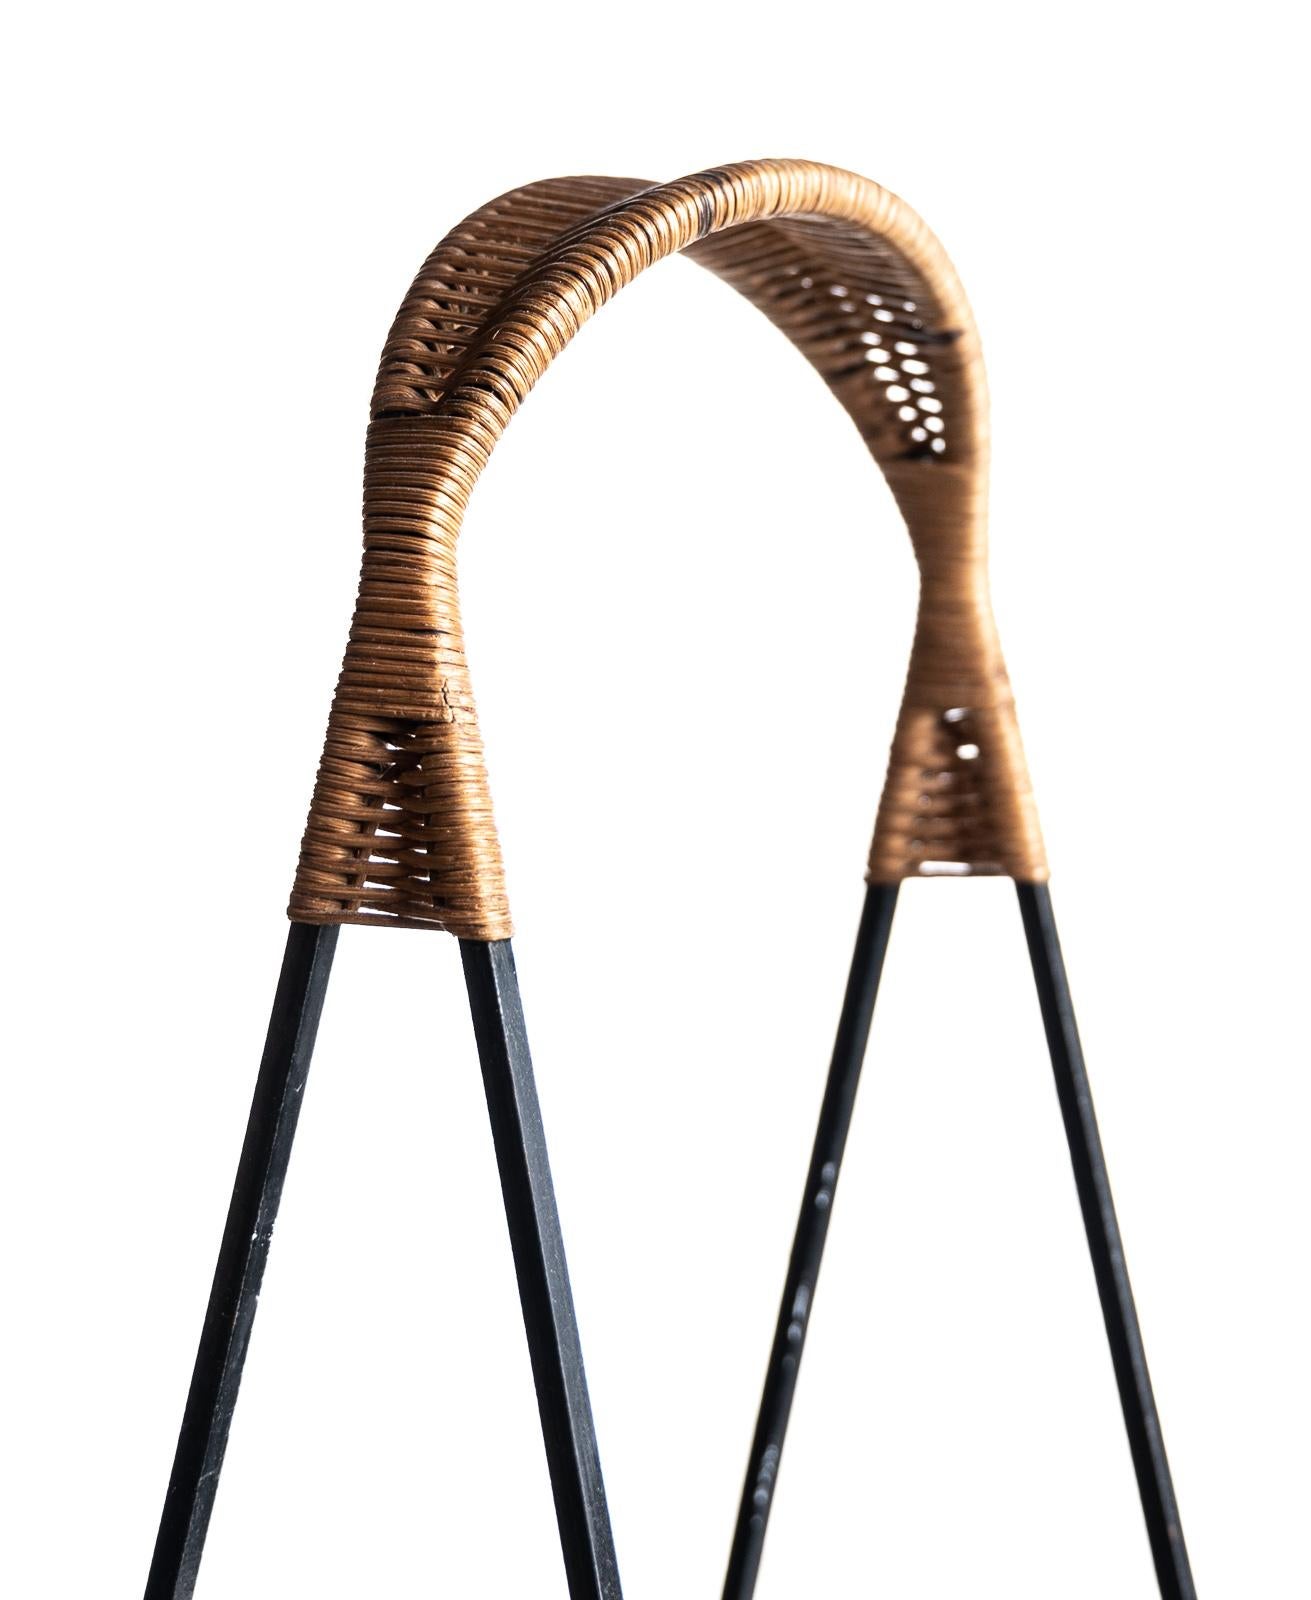 20th Century Rare Metal Basket with Wicker Handles by Mathieu Matégot